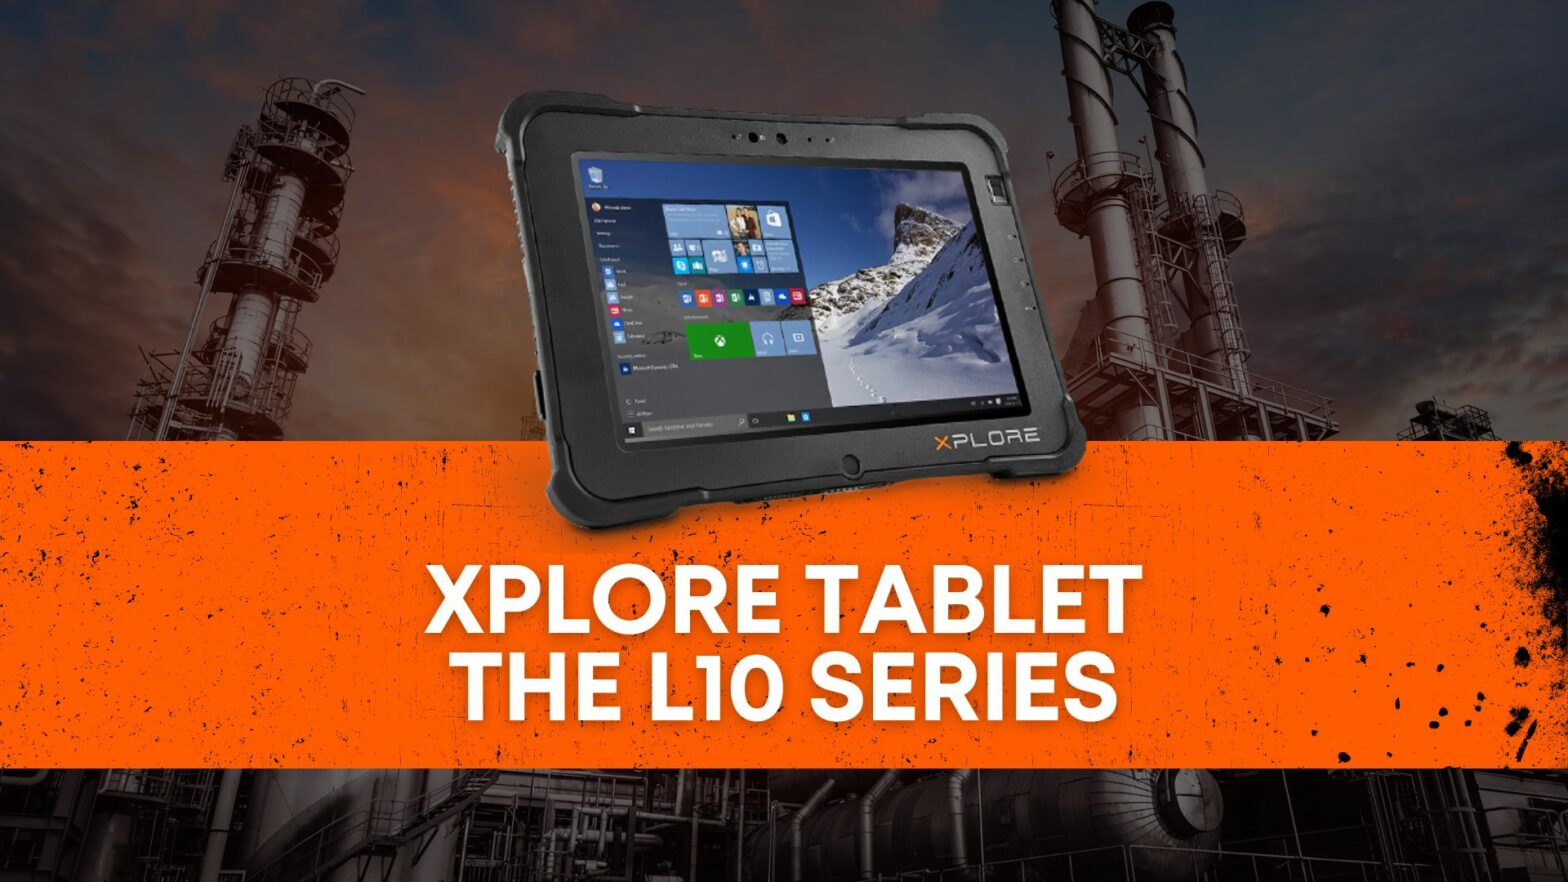 Xplore Tablet - The L10 series